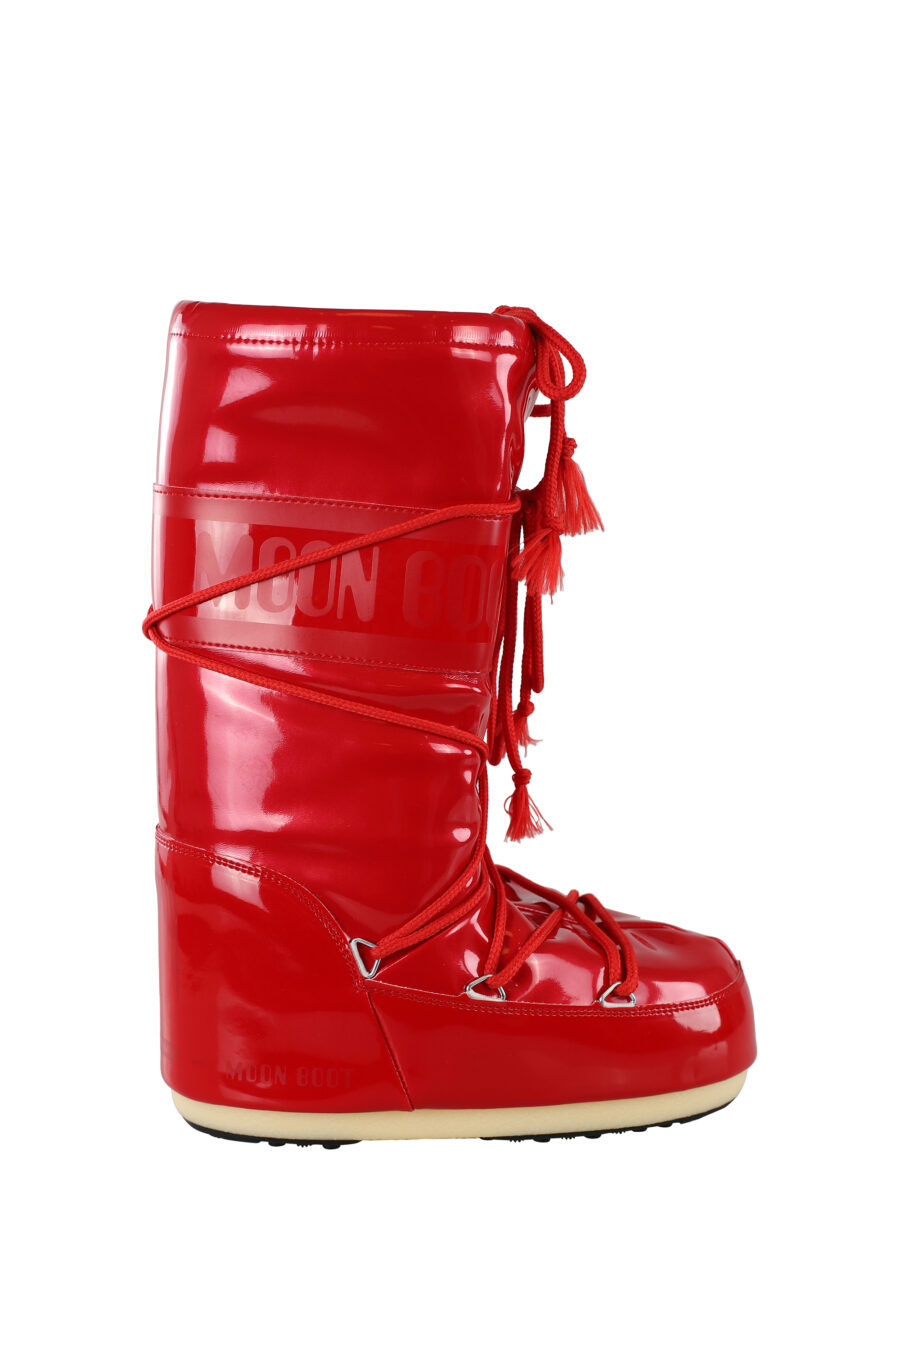 Botas de nieve rojas con logo monocromático - IMG 6748